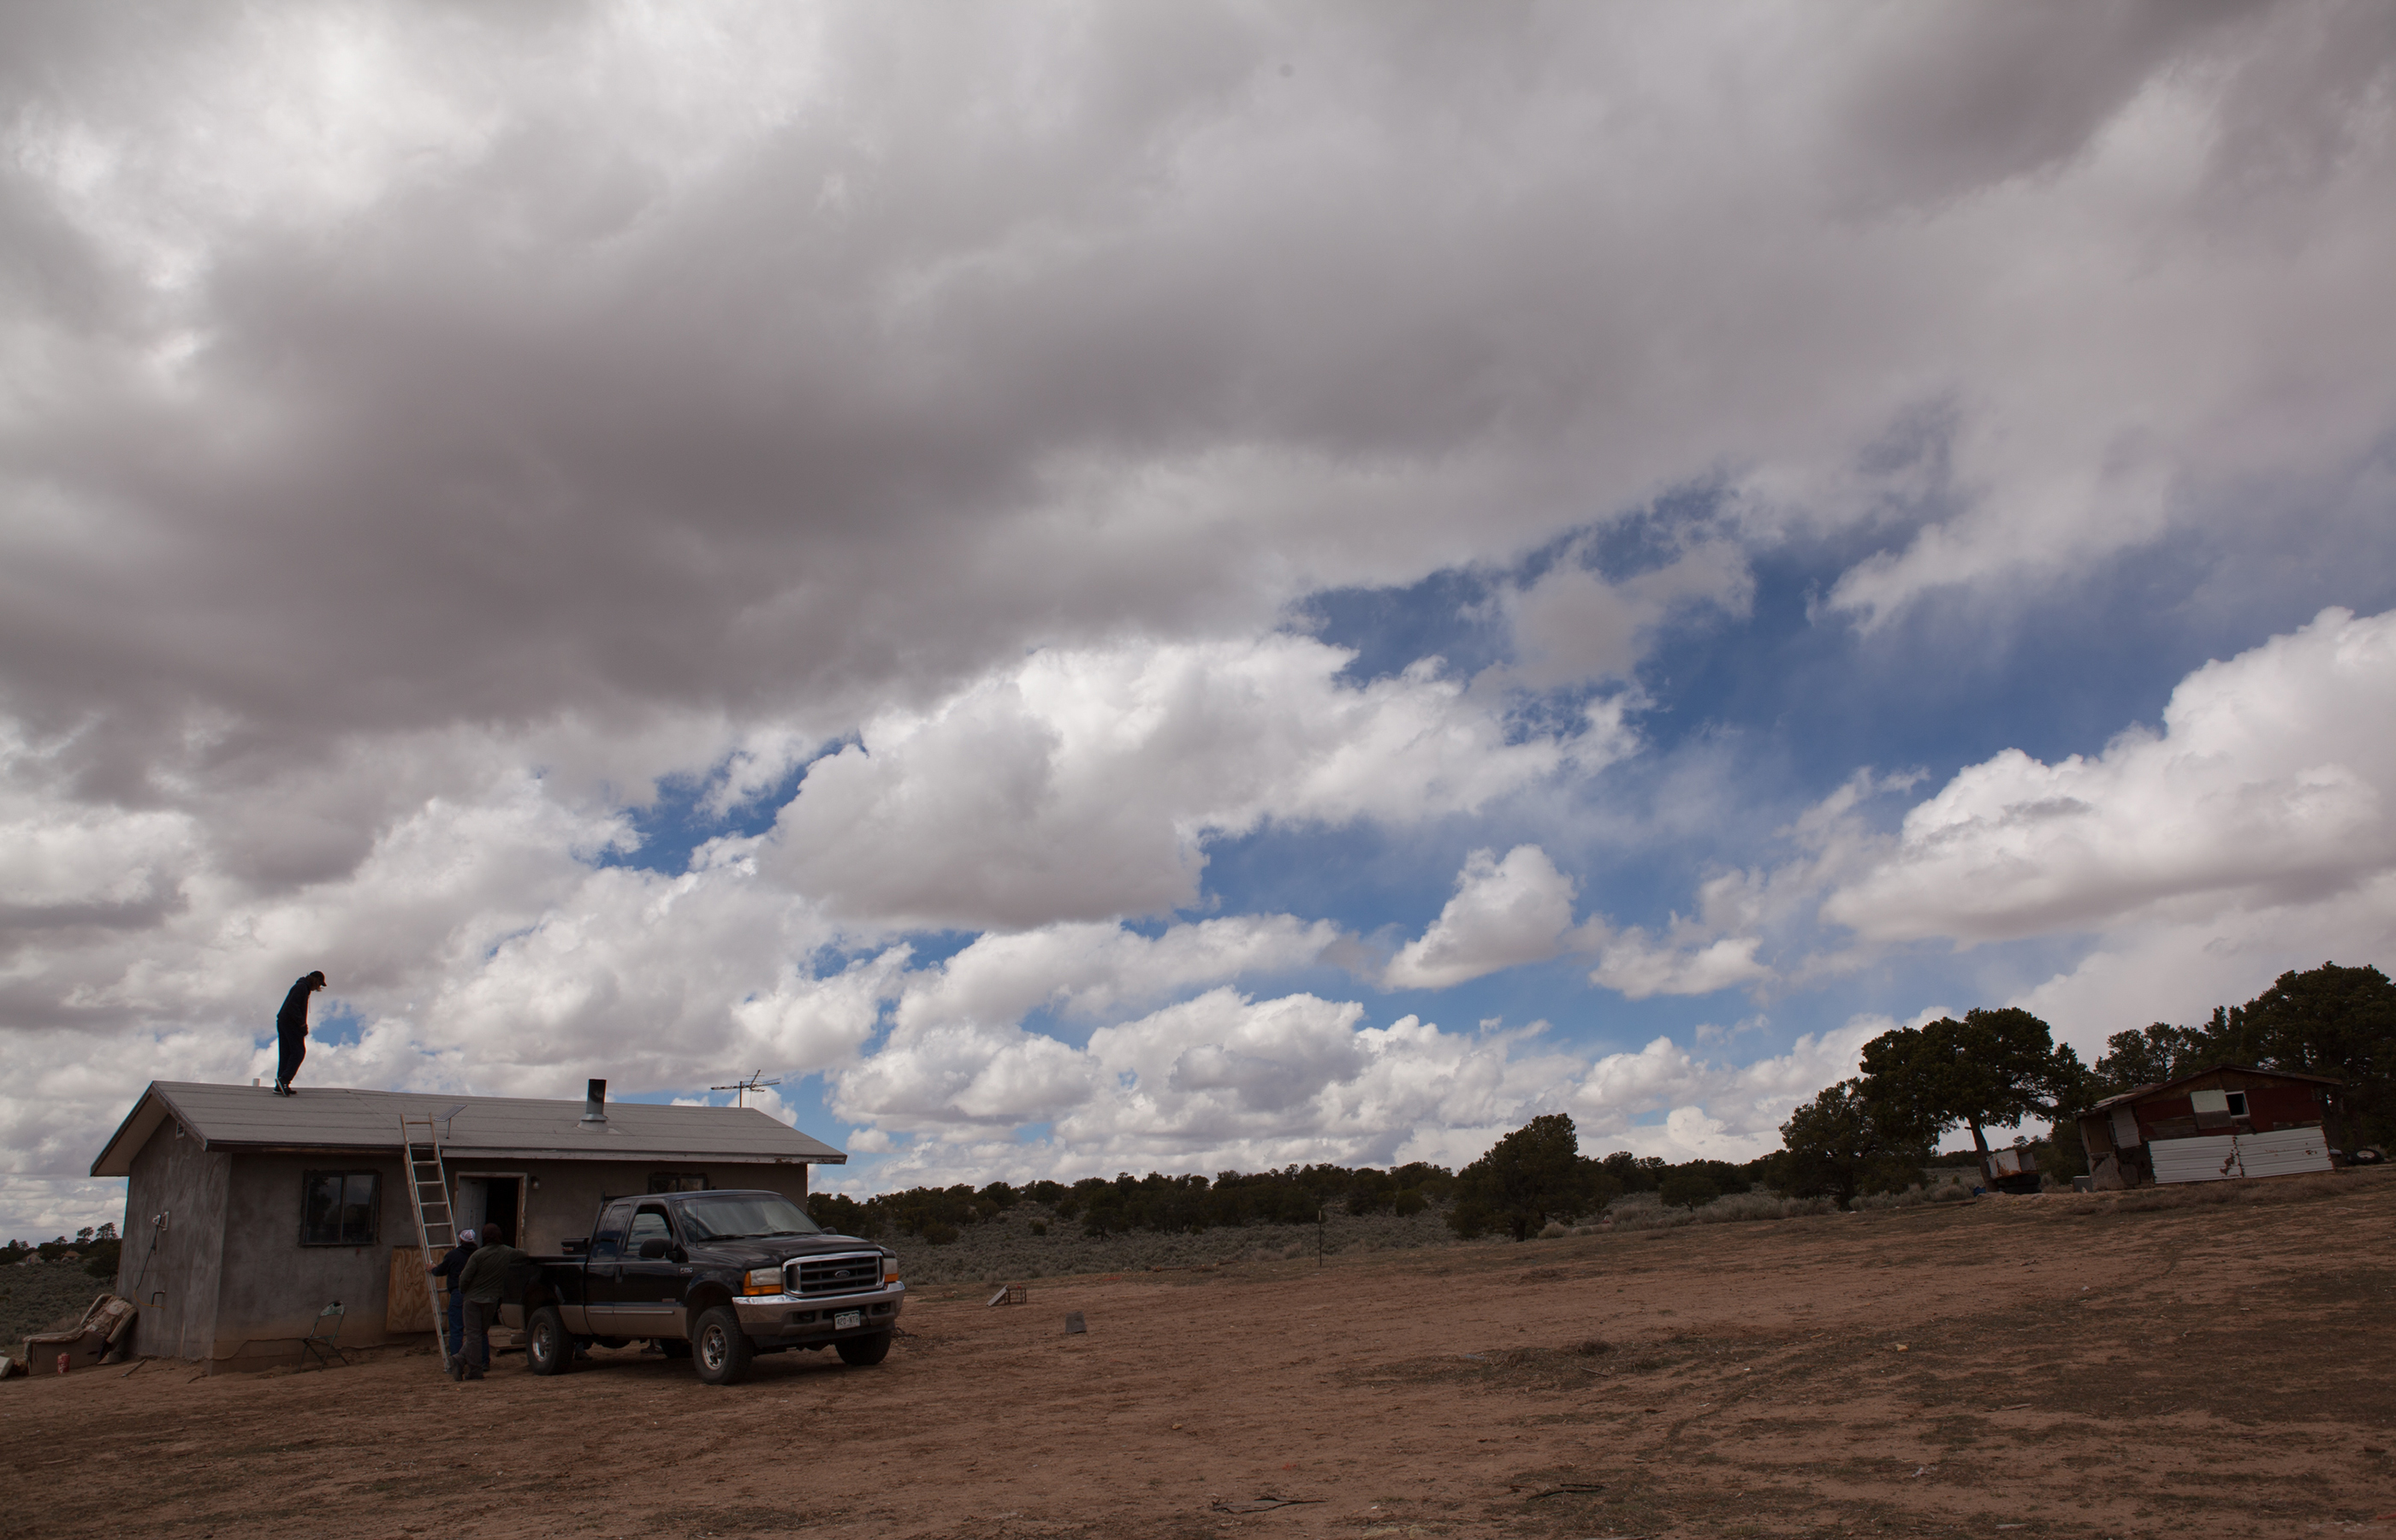 The vast landscape on the Navajo reservation